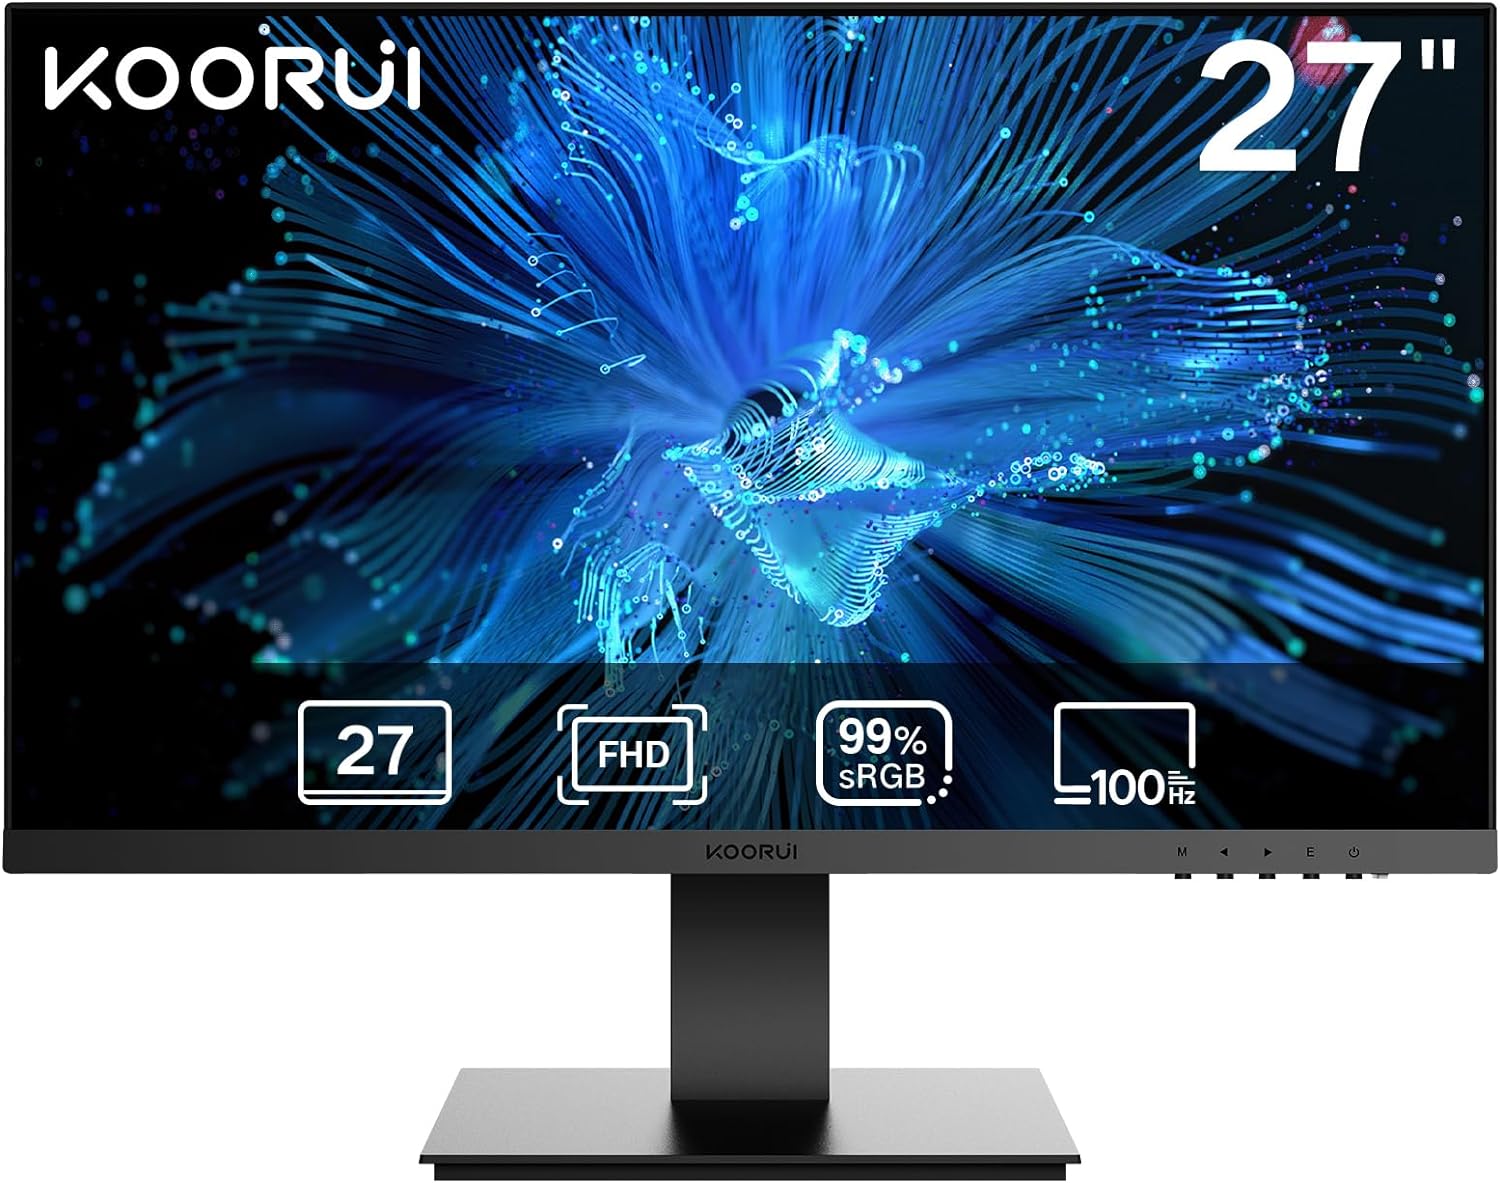 KOORUI 27-inch Curved Computer Monitor- Full HD 1080P 75Hz Gaming Monitor  1800R LED Monitor HDMI VGA, Tilt Adjustment, Eye Care, Black 27N5C 